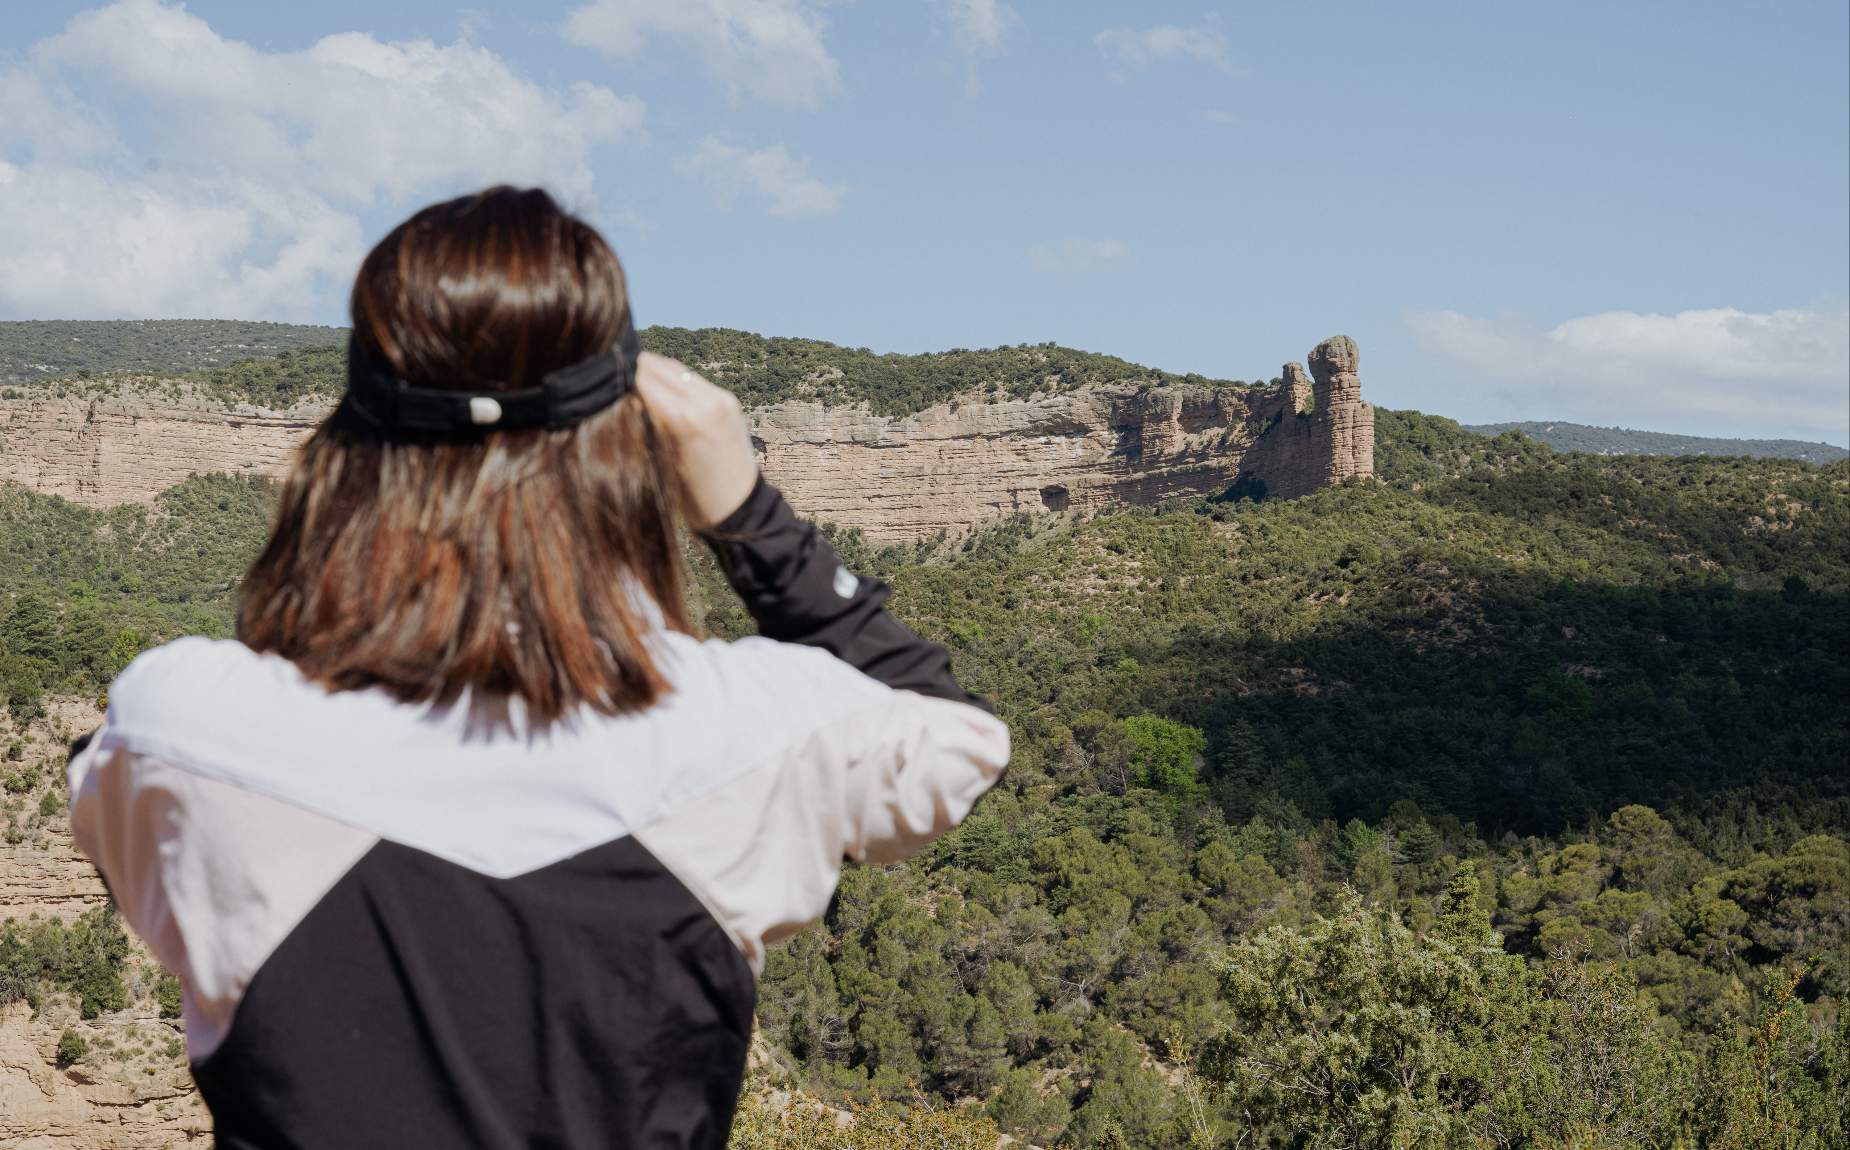 Girl looking through binoculars at the natural scenery